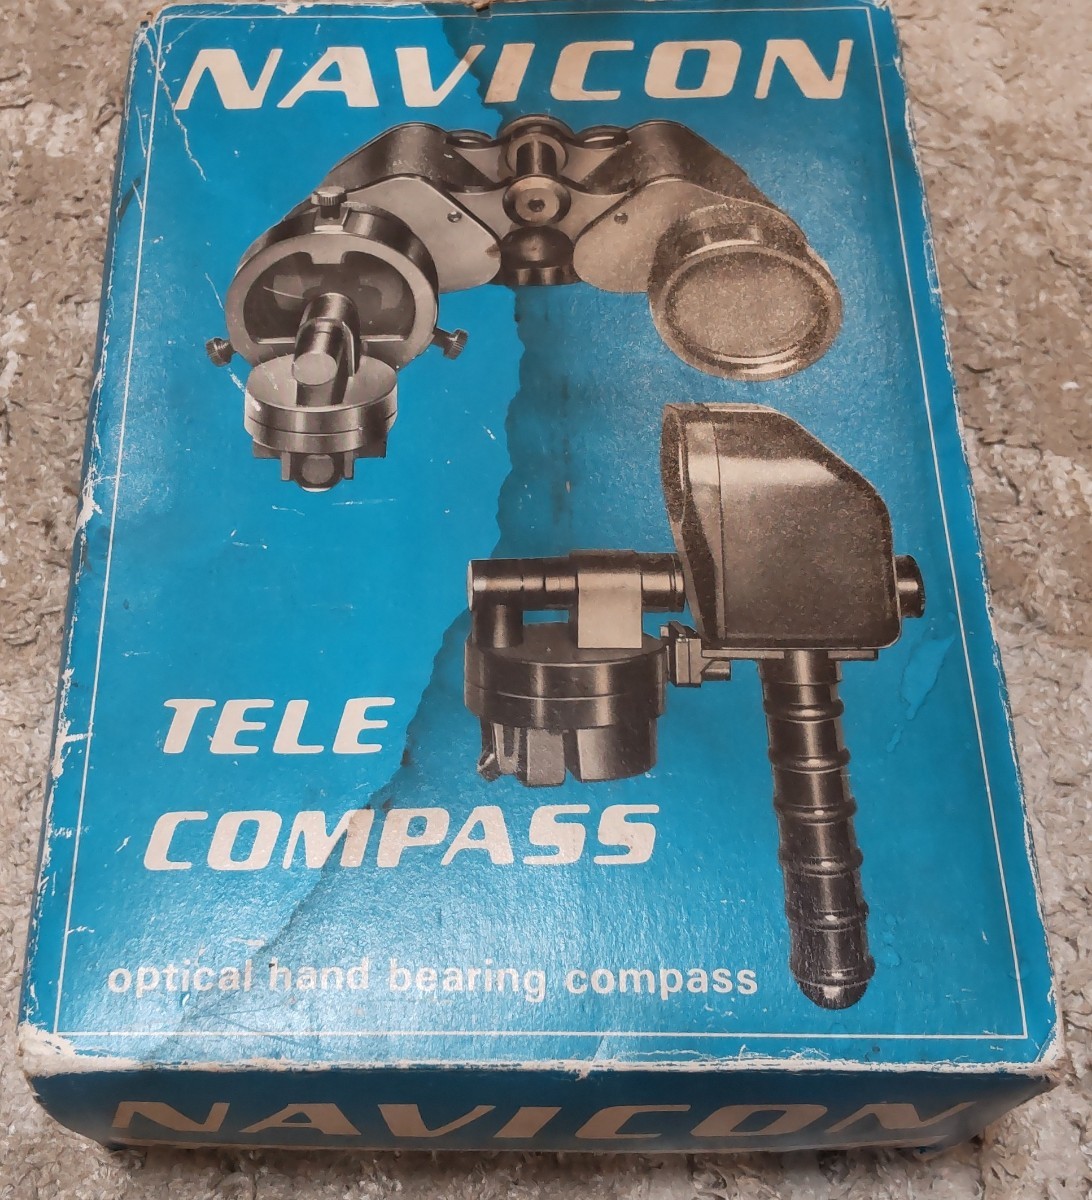 NAVICON社 TELE COMPASS 海洋コンパス optical hand bearing compass